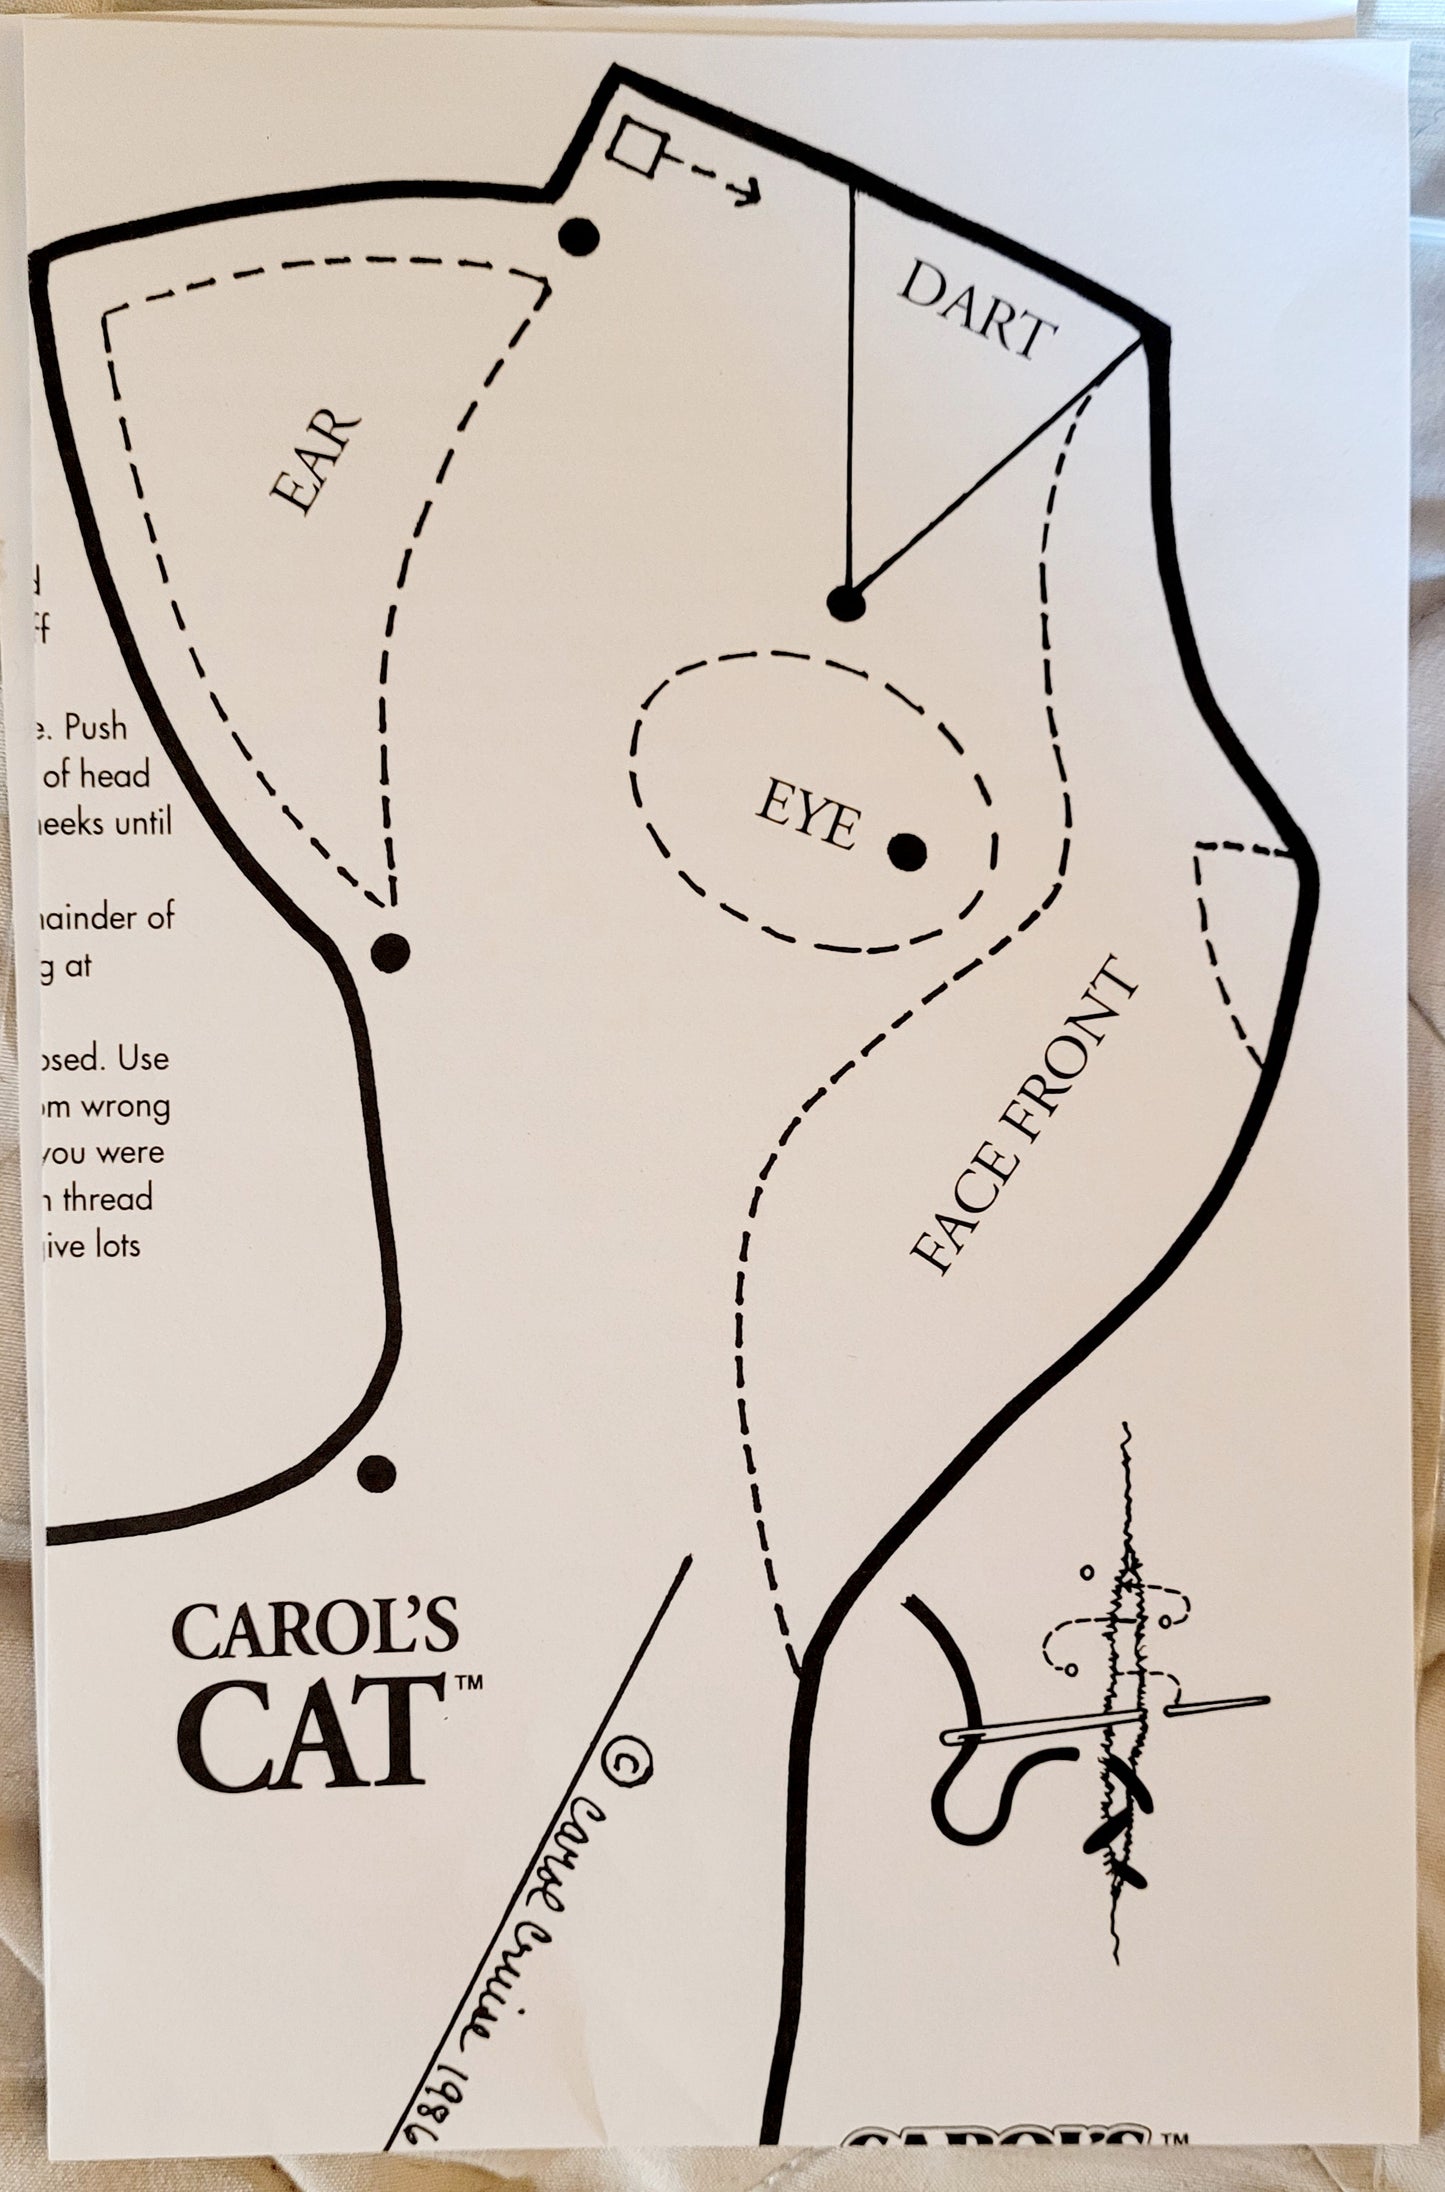 Carol's Zoo *Carol's Cat / 3 Pattern Pieces @1995